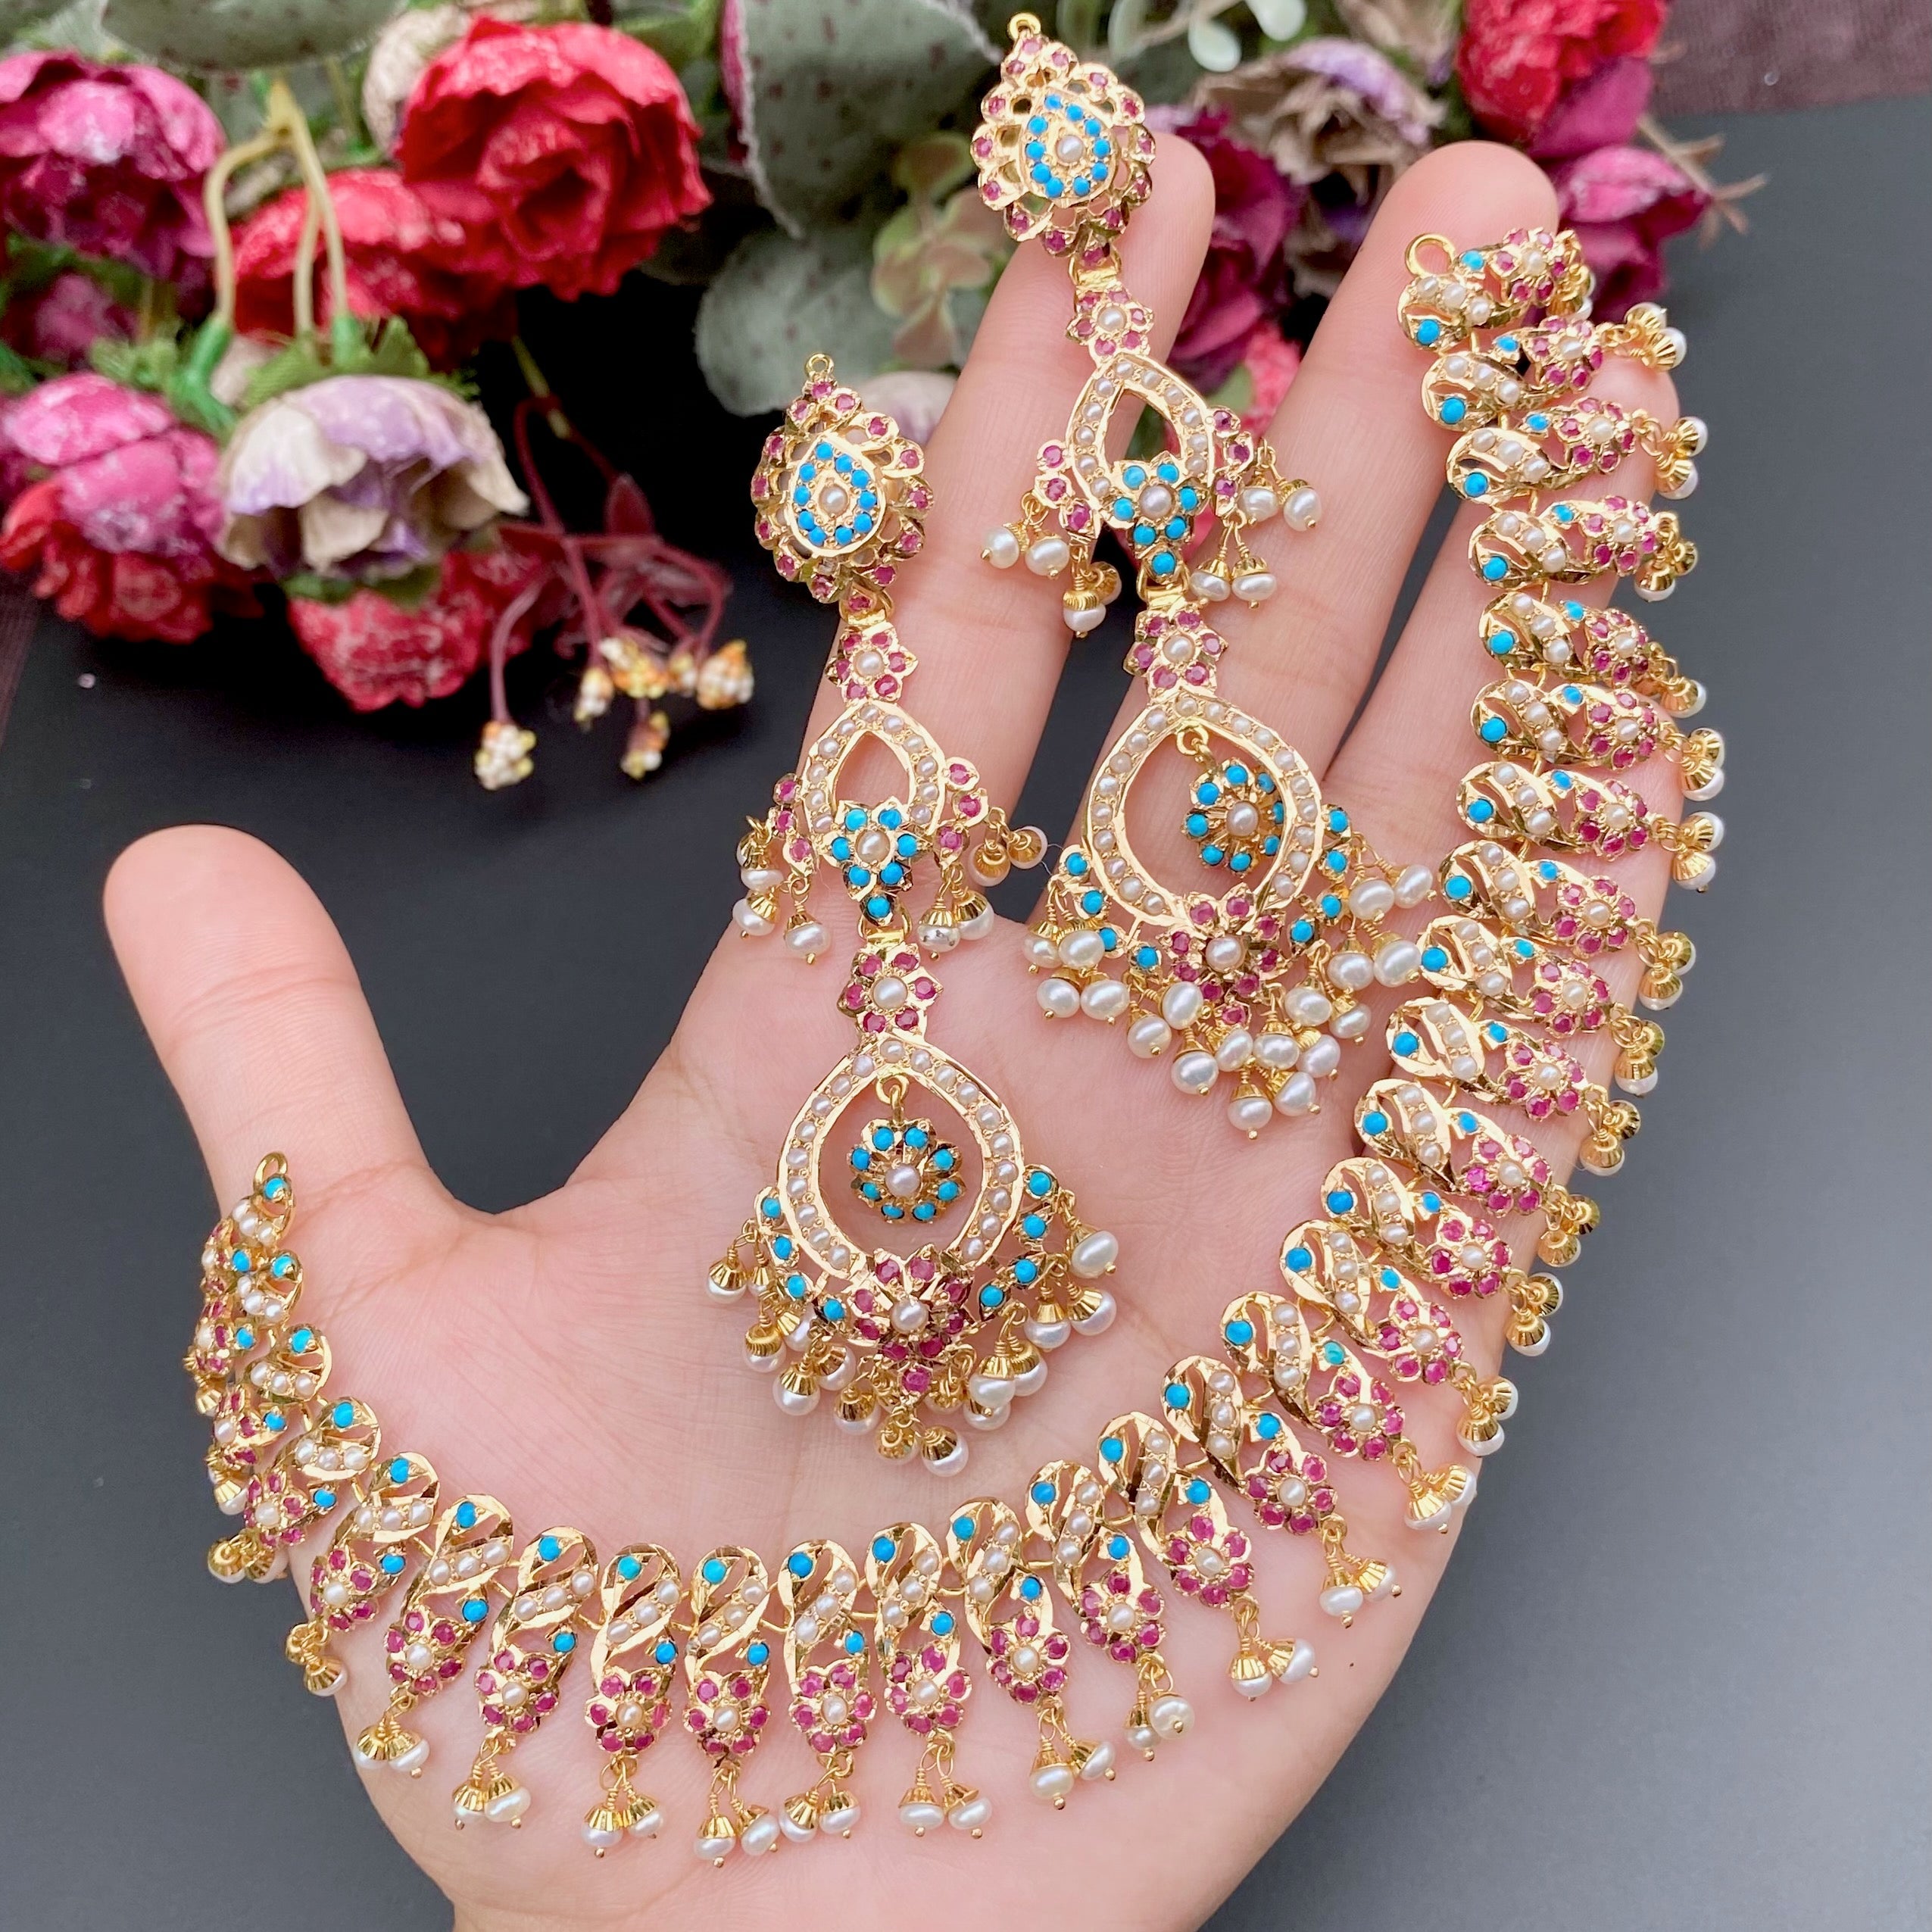 22 carat rajasthani gold set with long danglers design